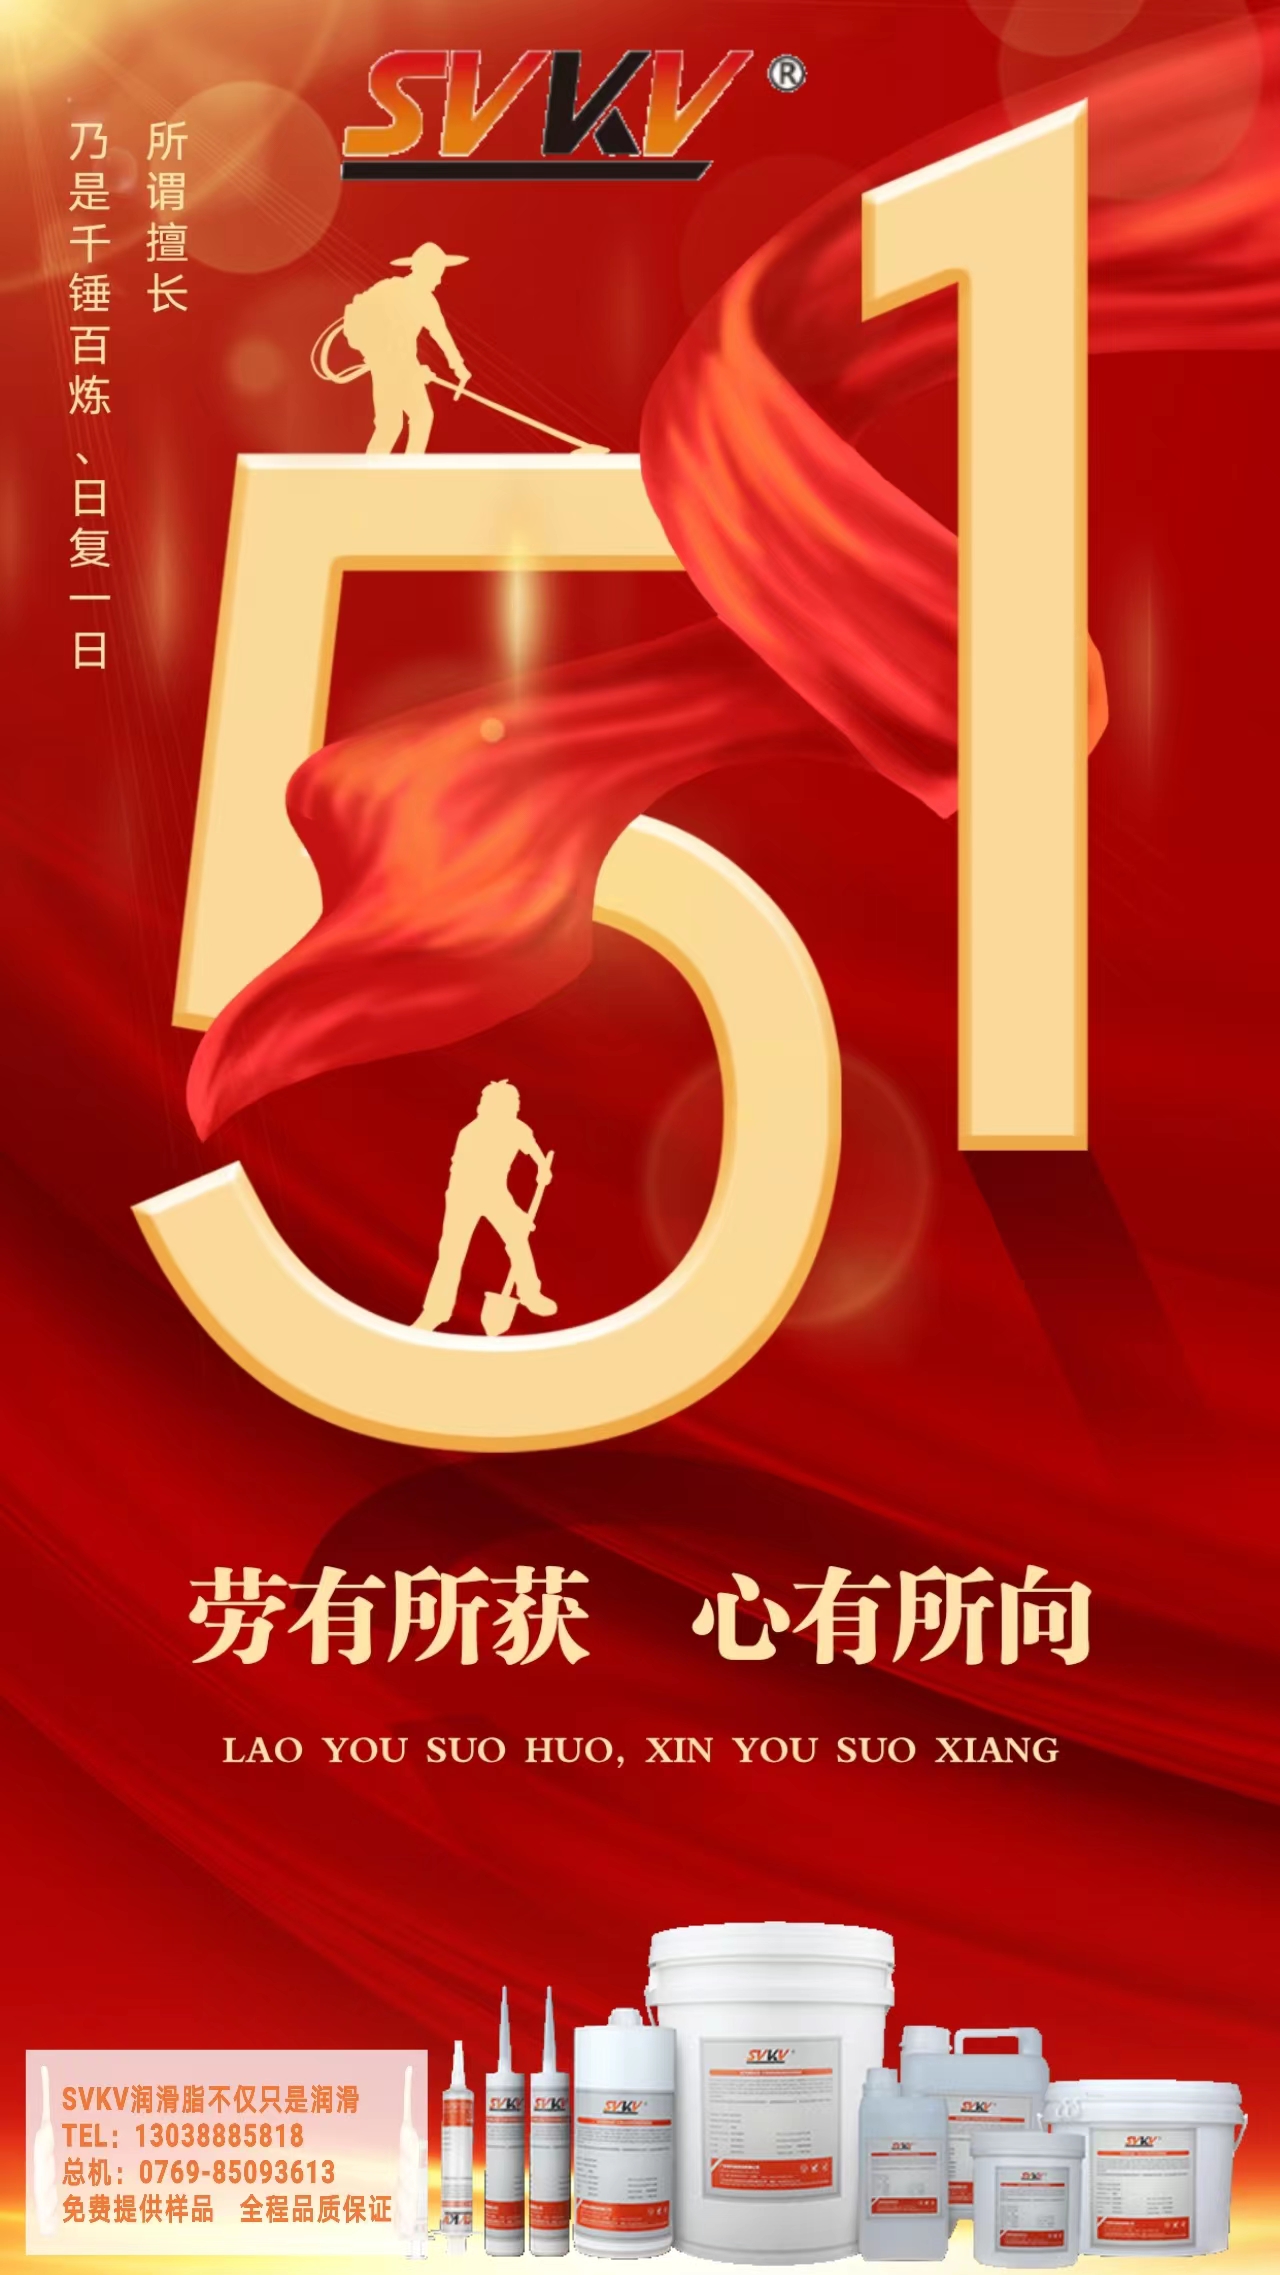 NBA中国官方网站润滑|向劳动者致敬，致敬每一个努力的人